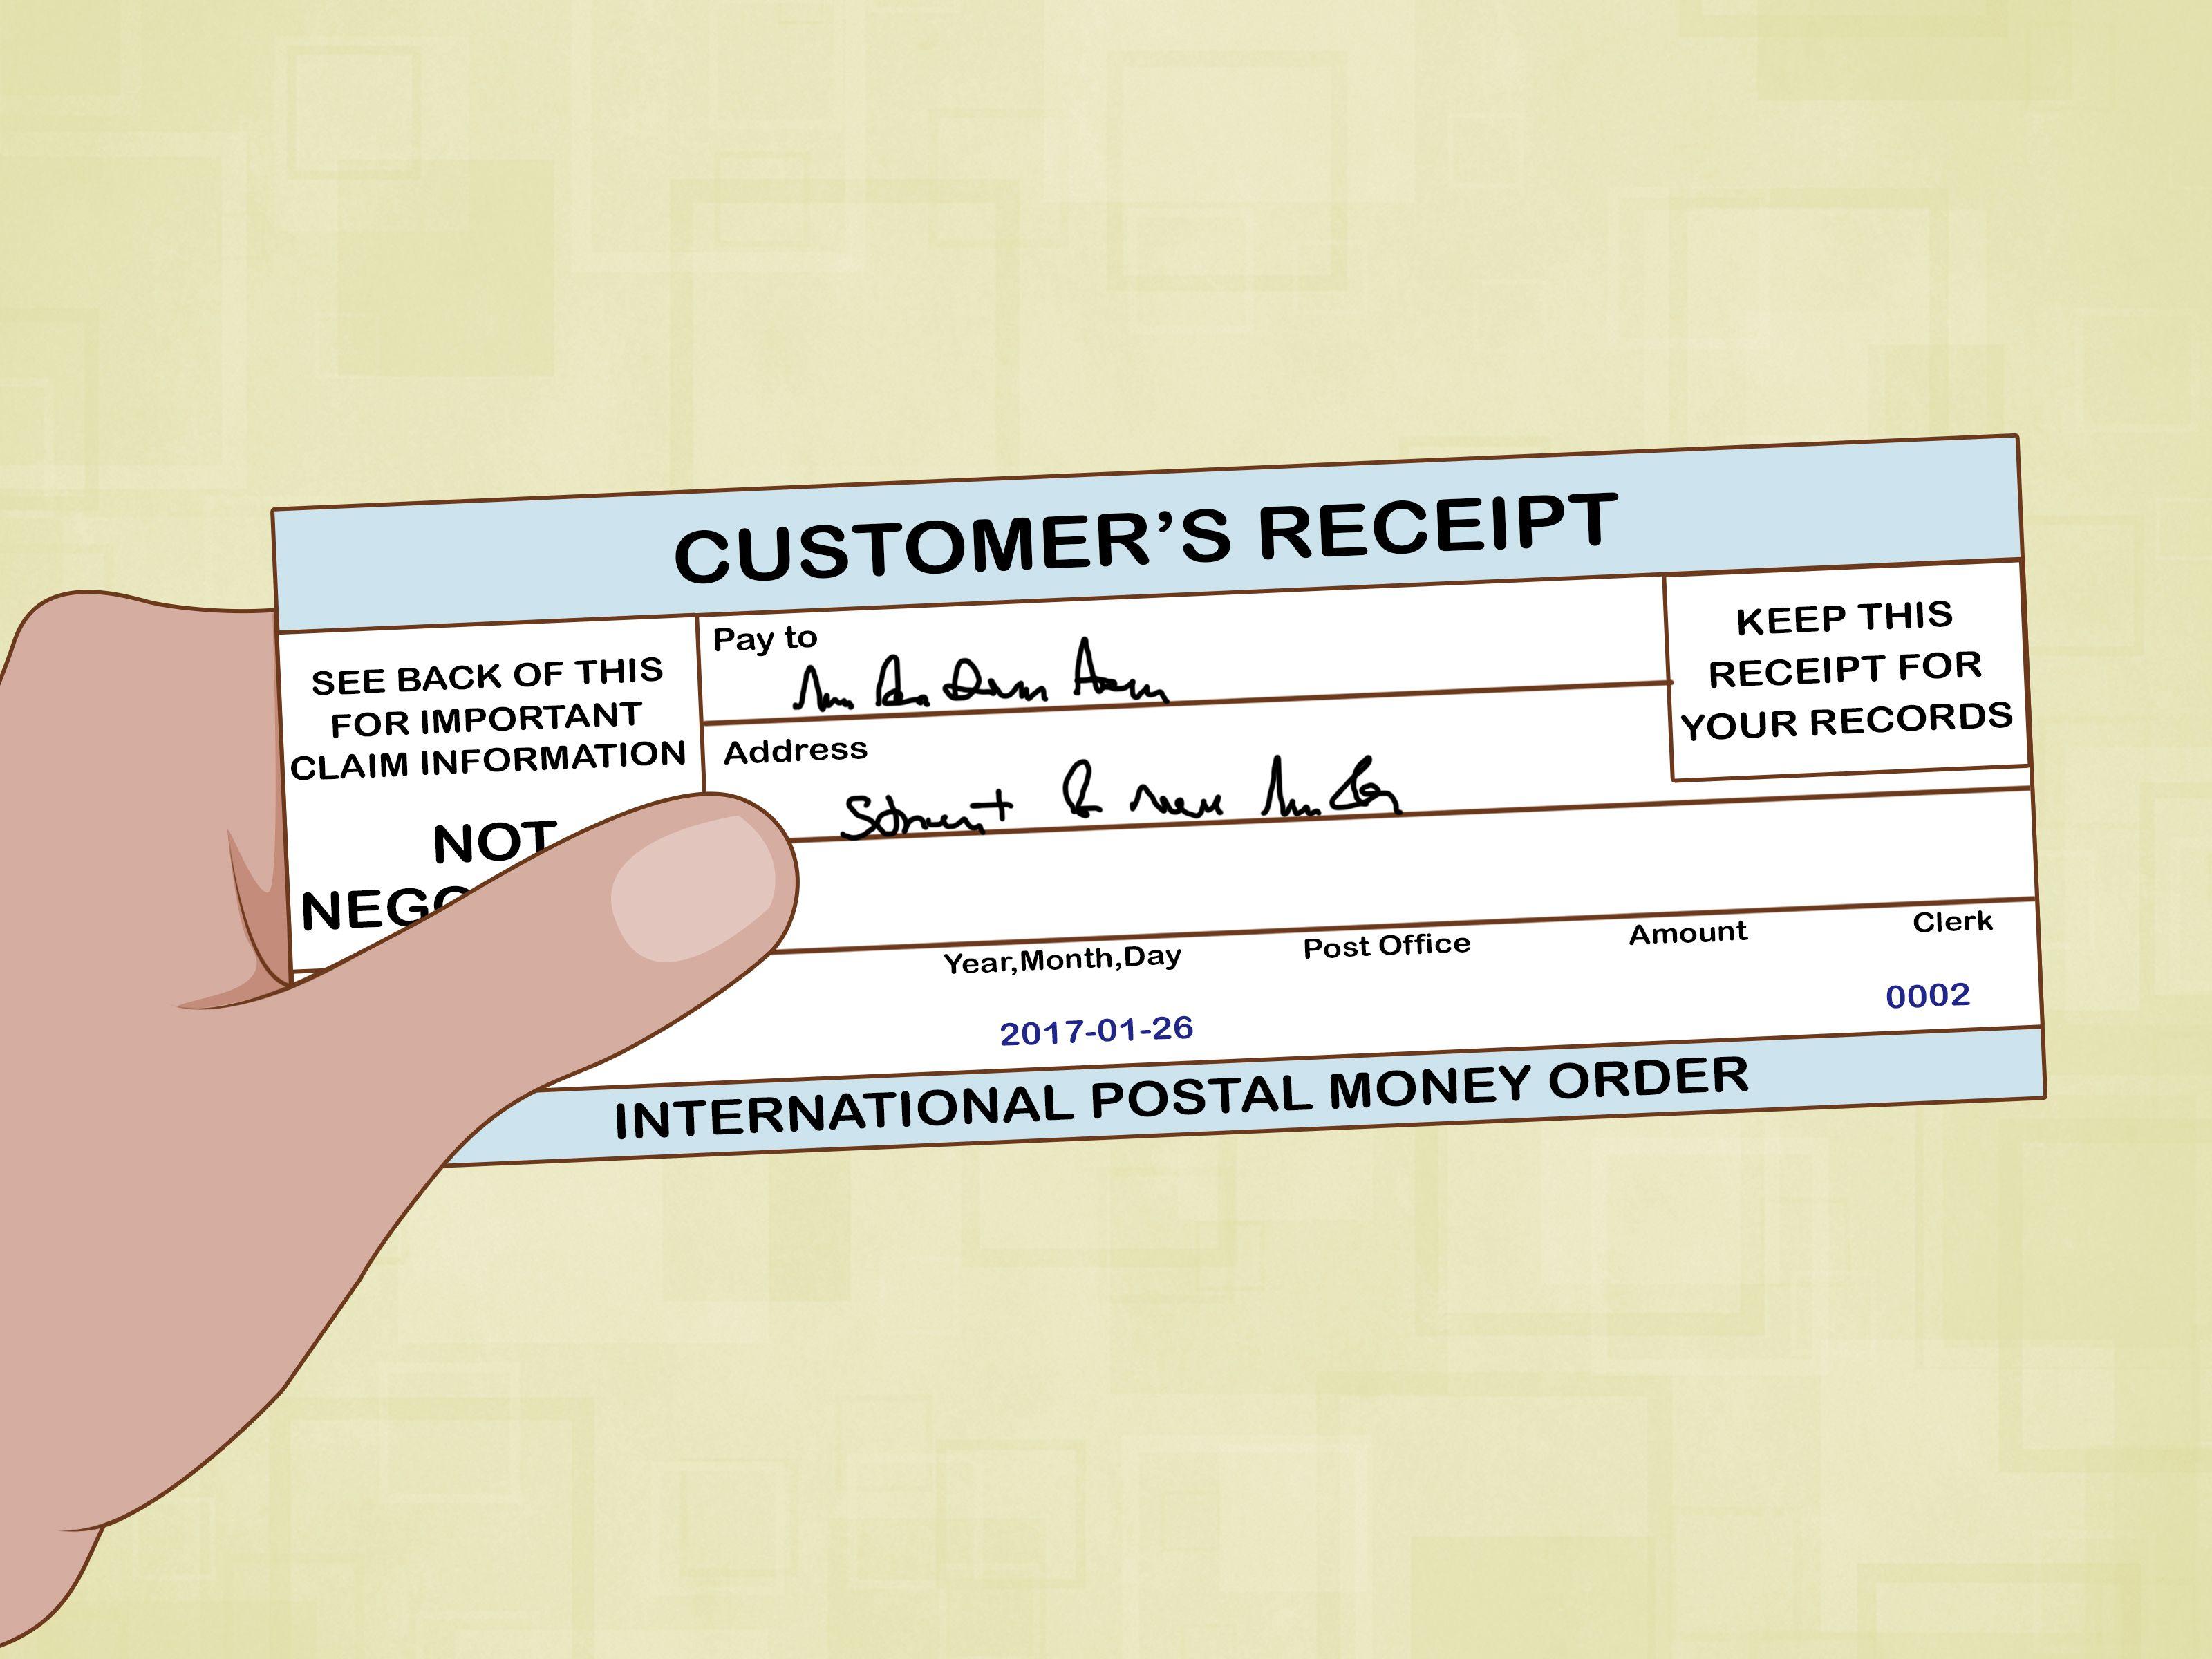 Cash Money Order Payment Logo - 3 Ways to Cash Money Orders - wikiHow